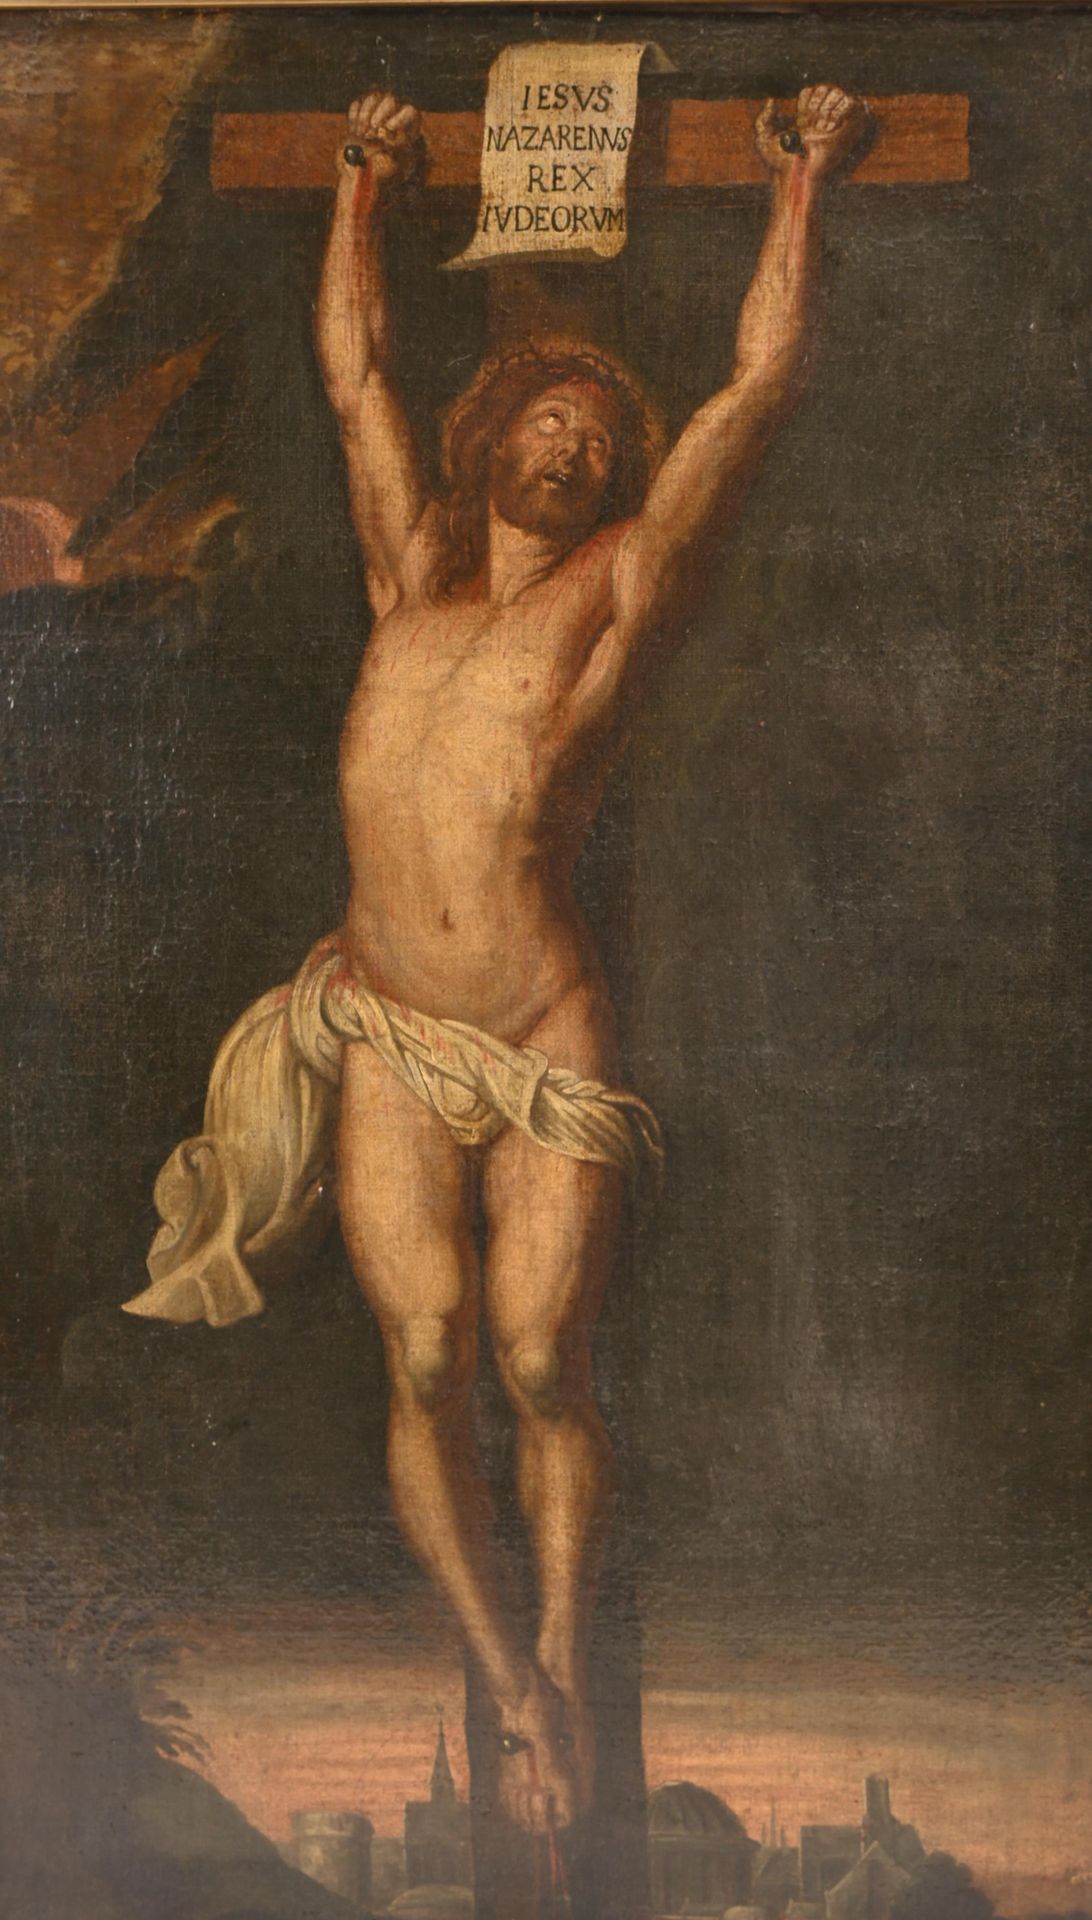 Ecole hollandaise du XVIII ème siècle. 18世纪的荷兰画派。

"拿撒勒人耶稣，犹太人的国王"。

布面油画。

旧的修复&hellip;